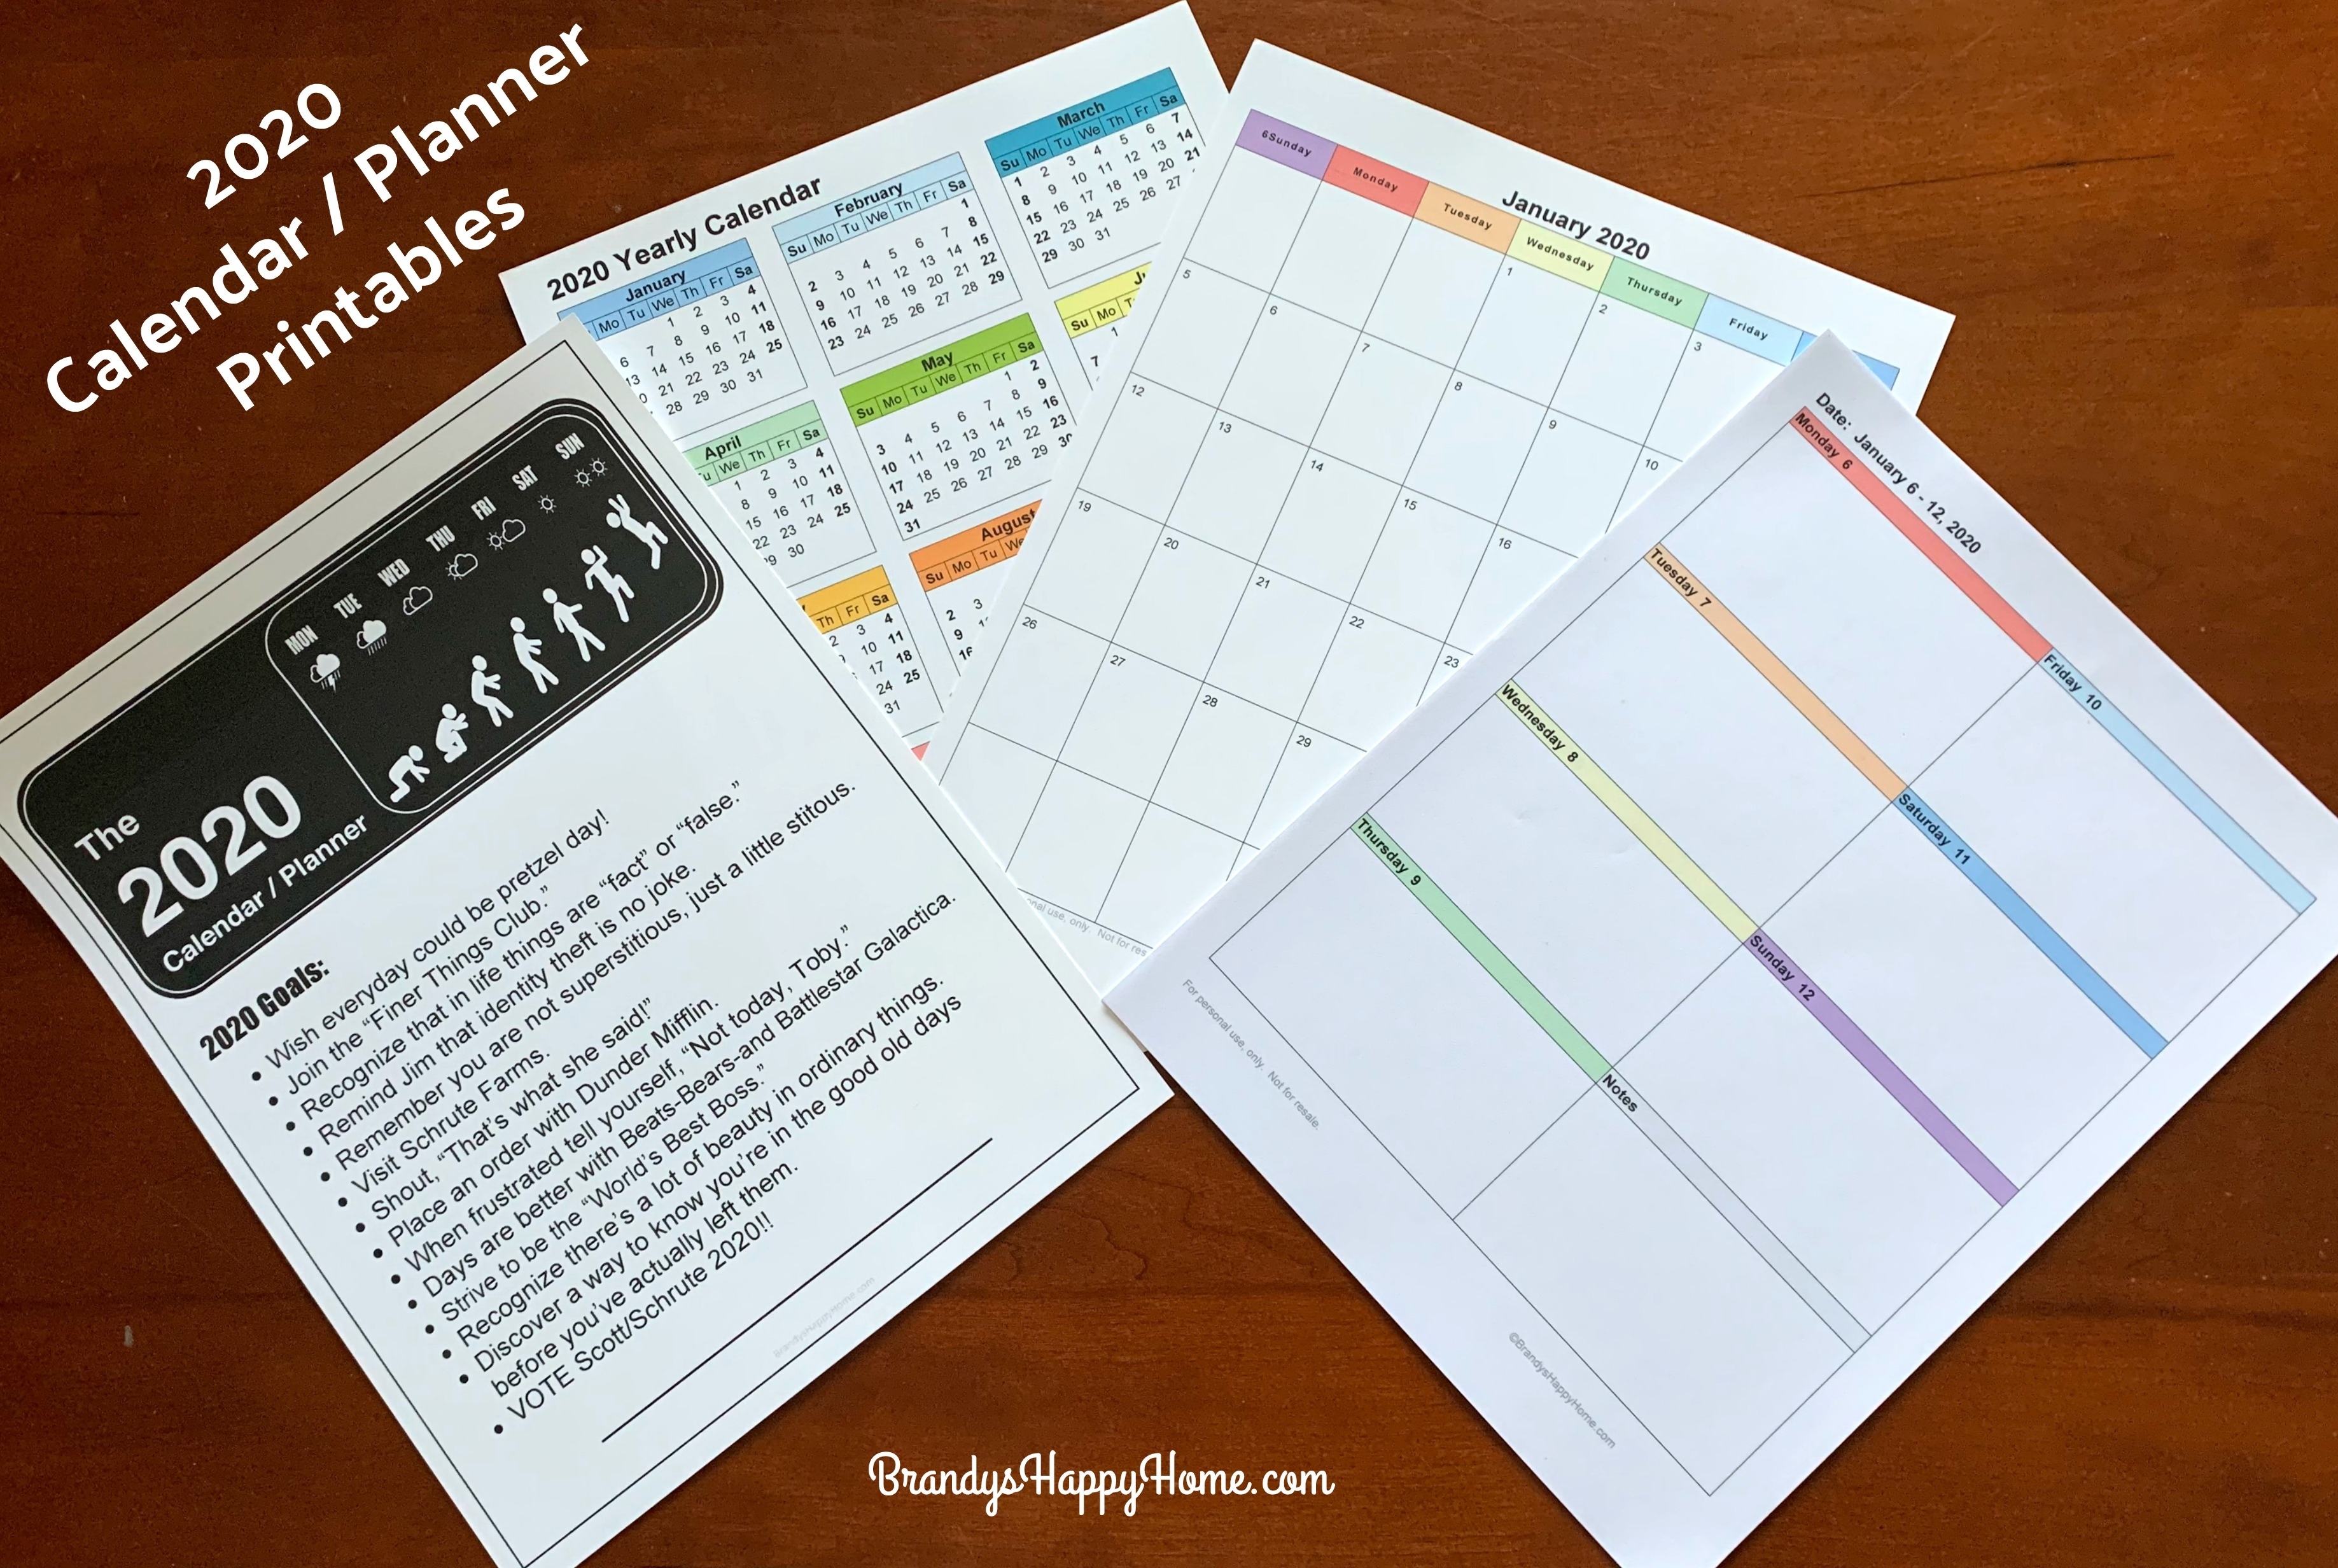 Free 2020 Diy Calendar Planner Printables 3-Ring Binder Calendar Template